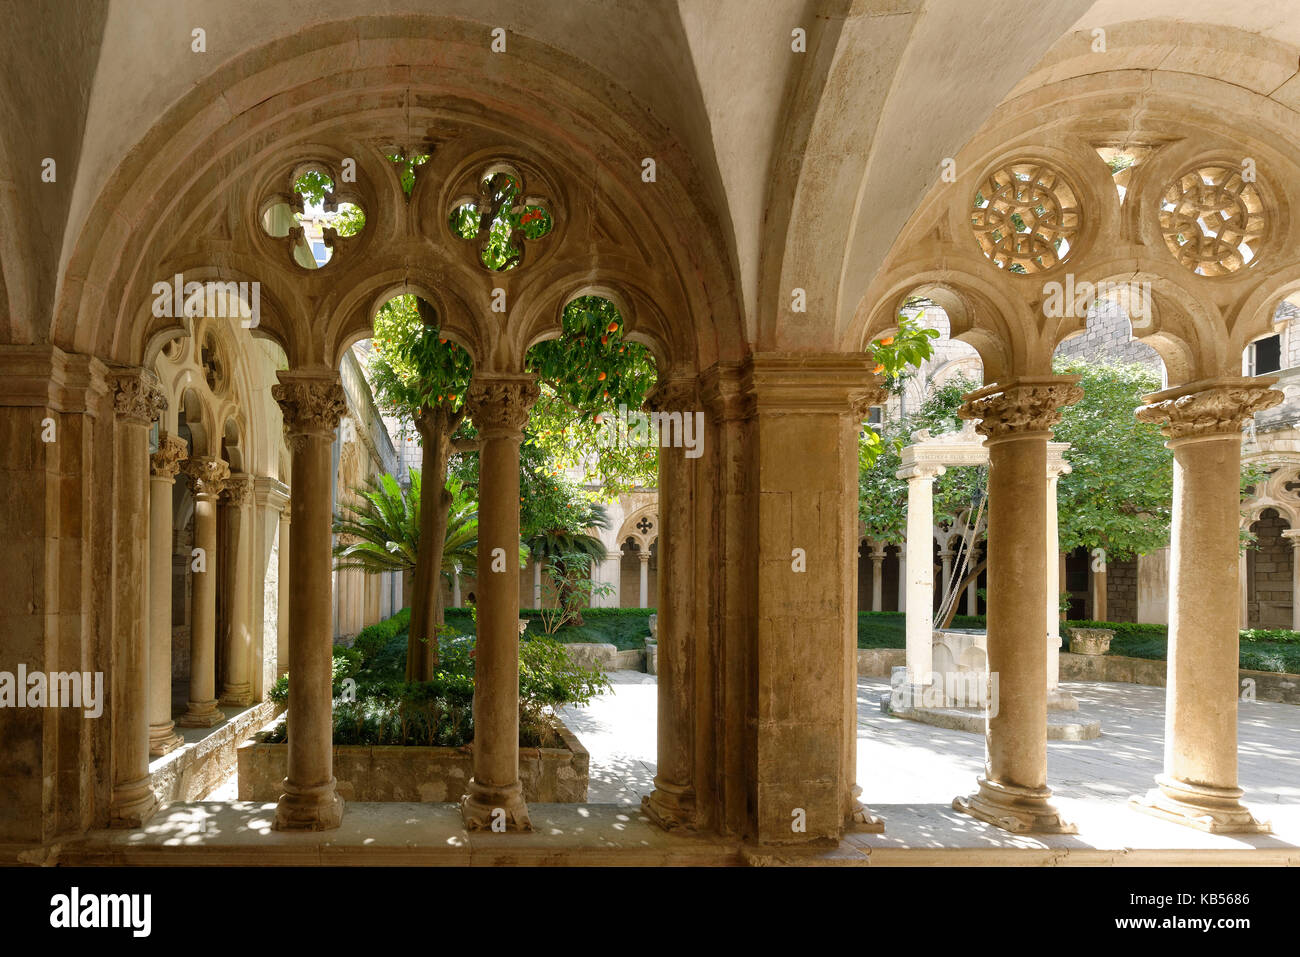 Croatia, Dalmatia, Dalmatian coast, Dubrovnik historical centre, listed as World Heritage by UNESCO, cloister of the Dominican Monastery Stock Photo